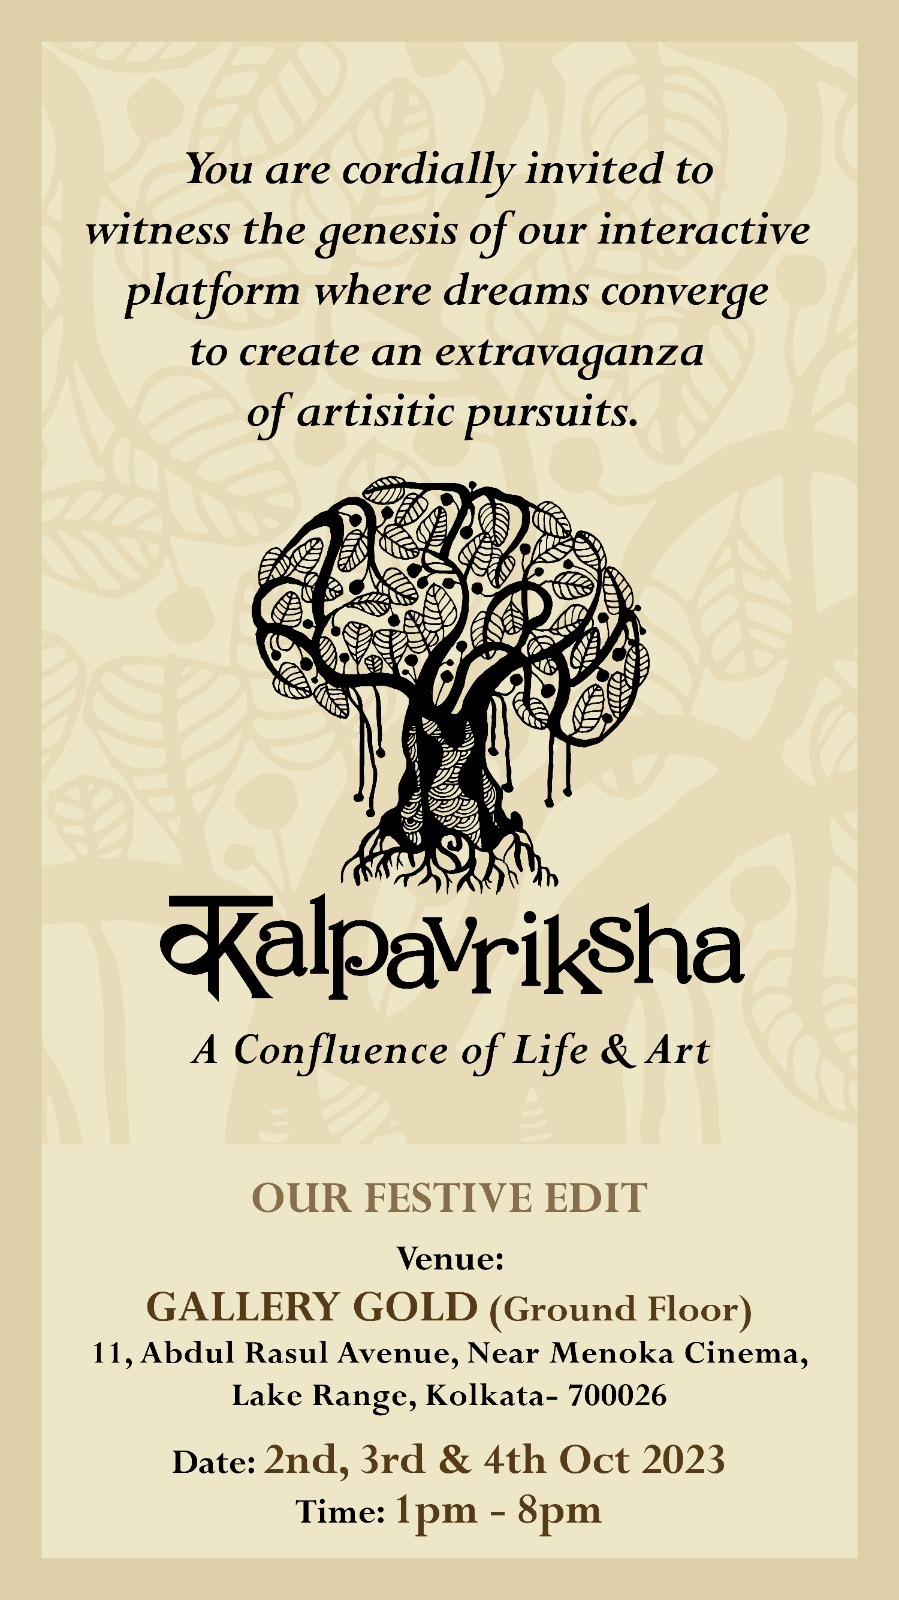 Kalpavriksha - A Confluence of Life & Art